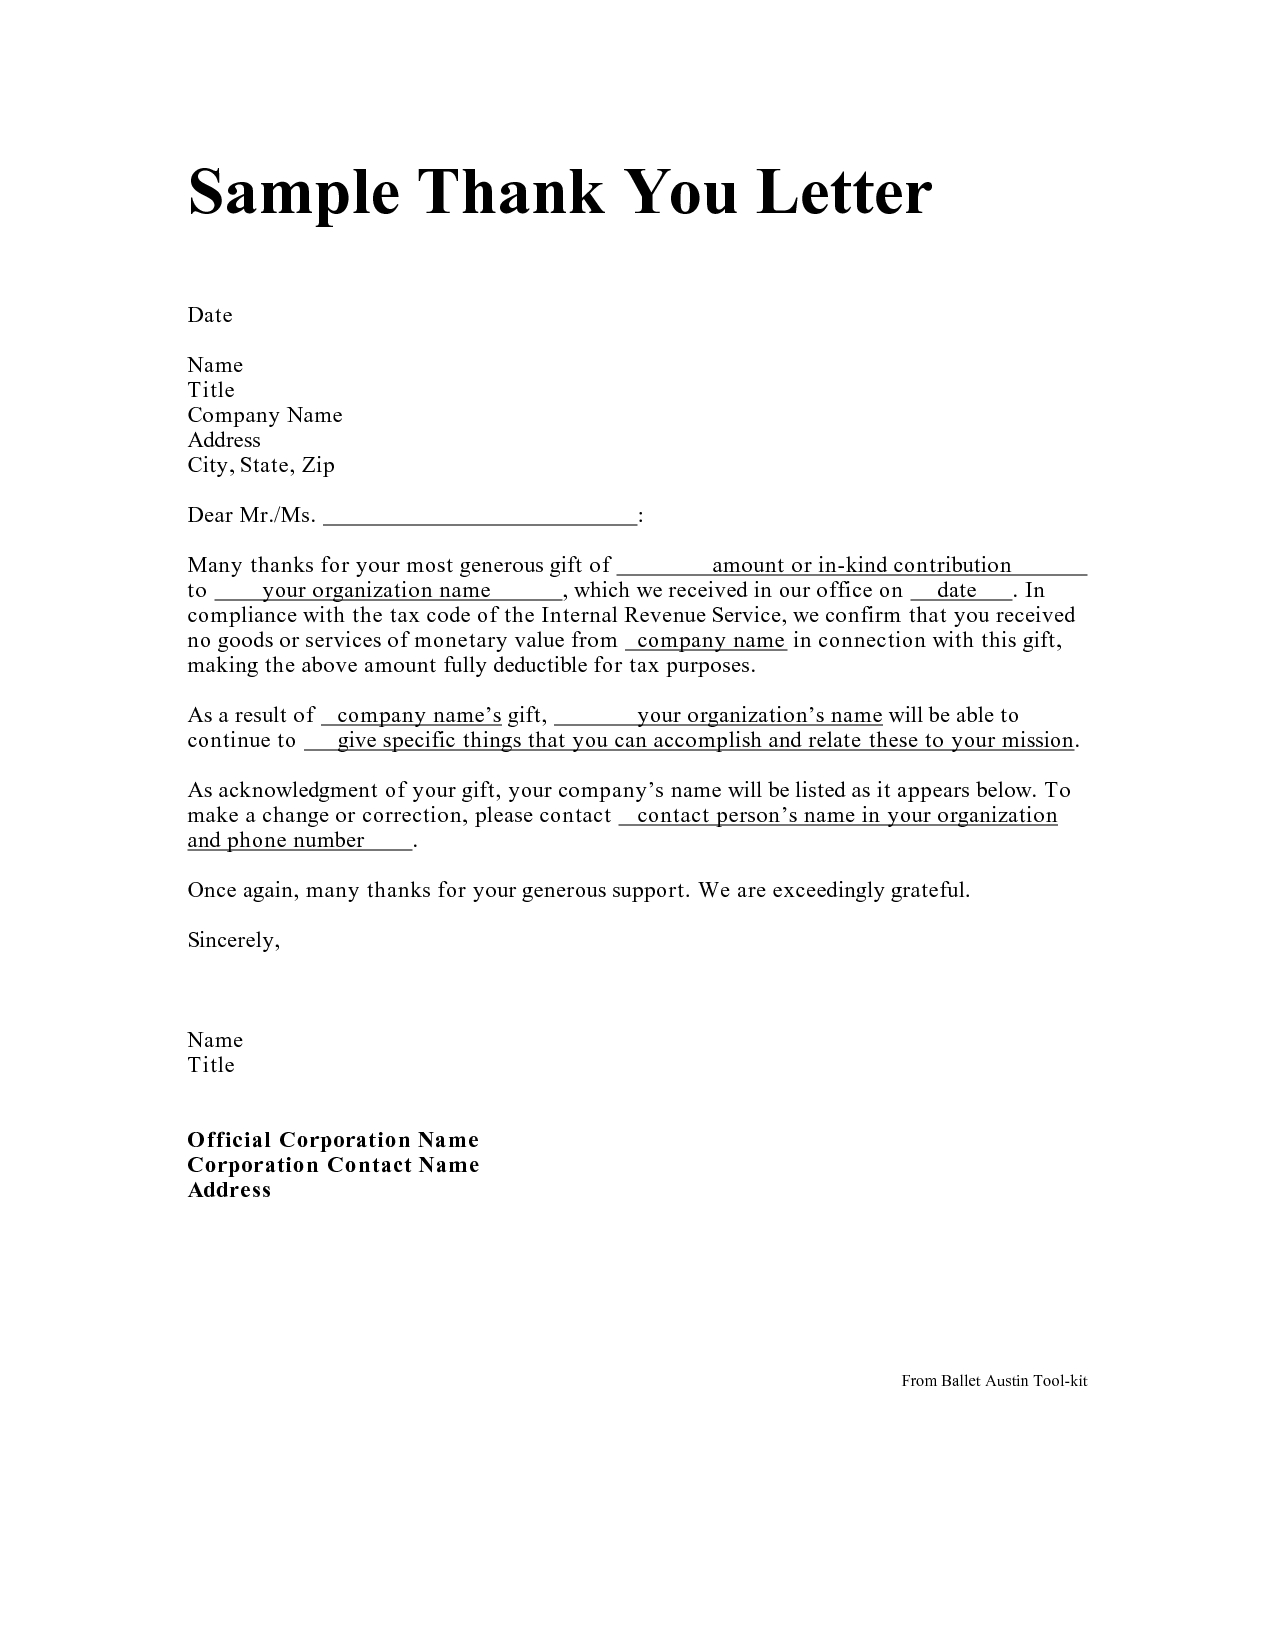 Secret Santa Letter Template - Personal Thank You Letter Personal Thank You Letter Samples